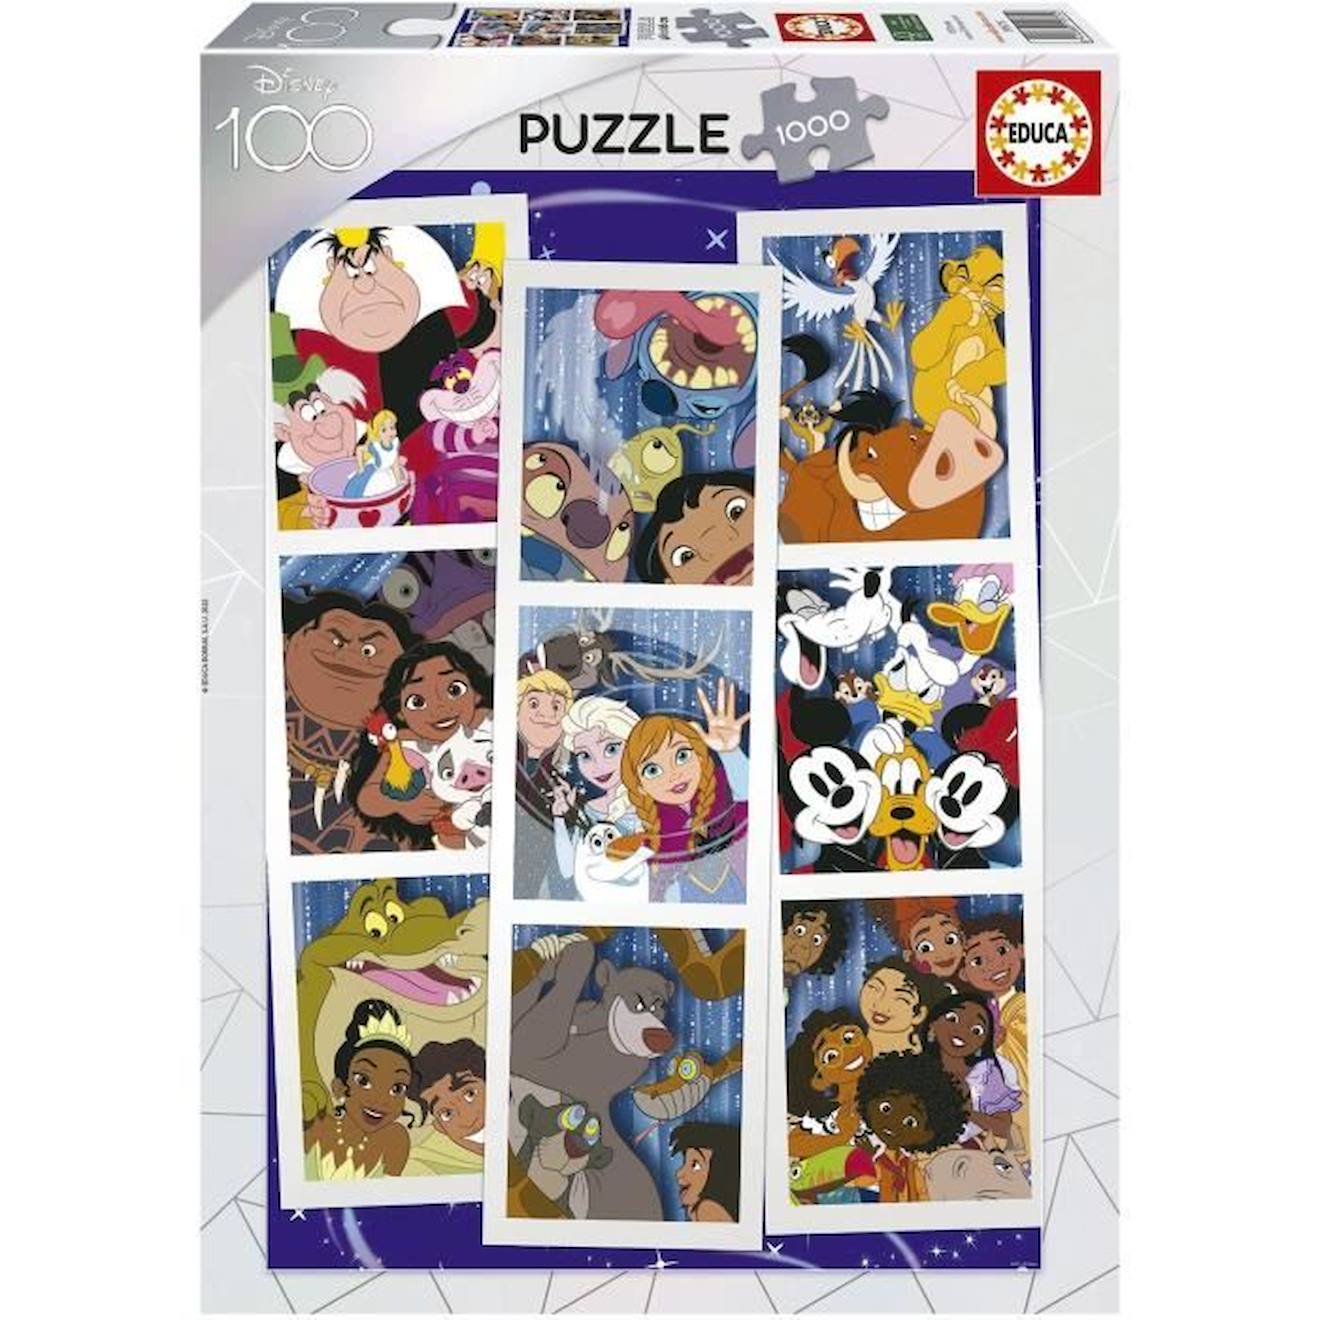 Puzzle 1000 Pièces Collage Disney 100 - Marque Educa - Dimensions 68 X 48 Cm Blanc